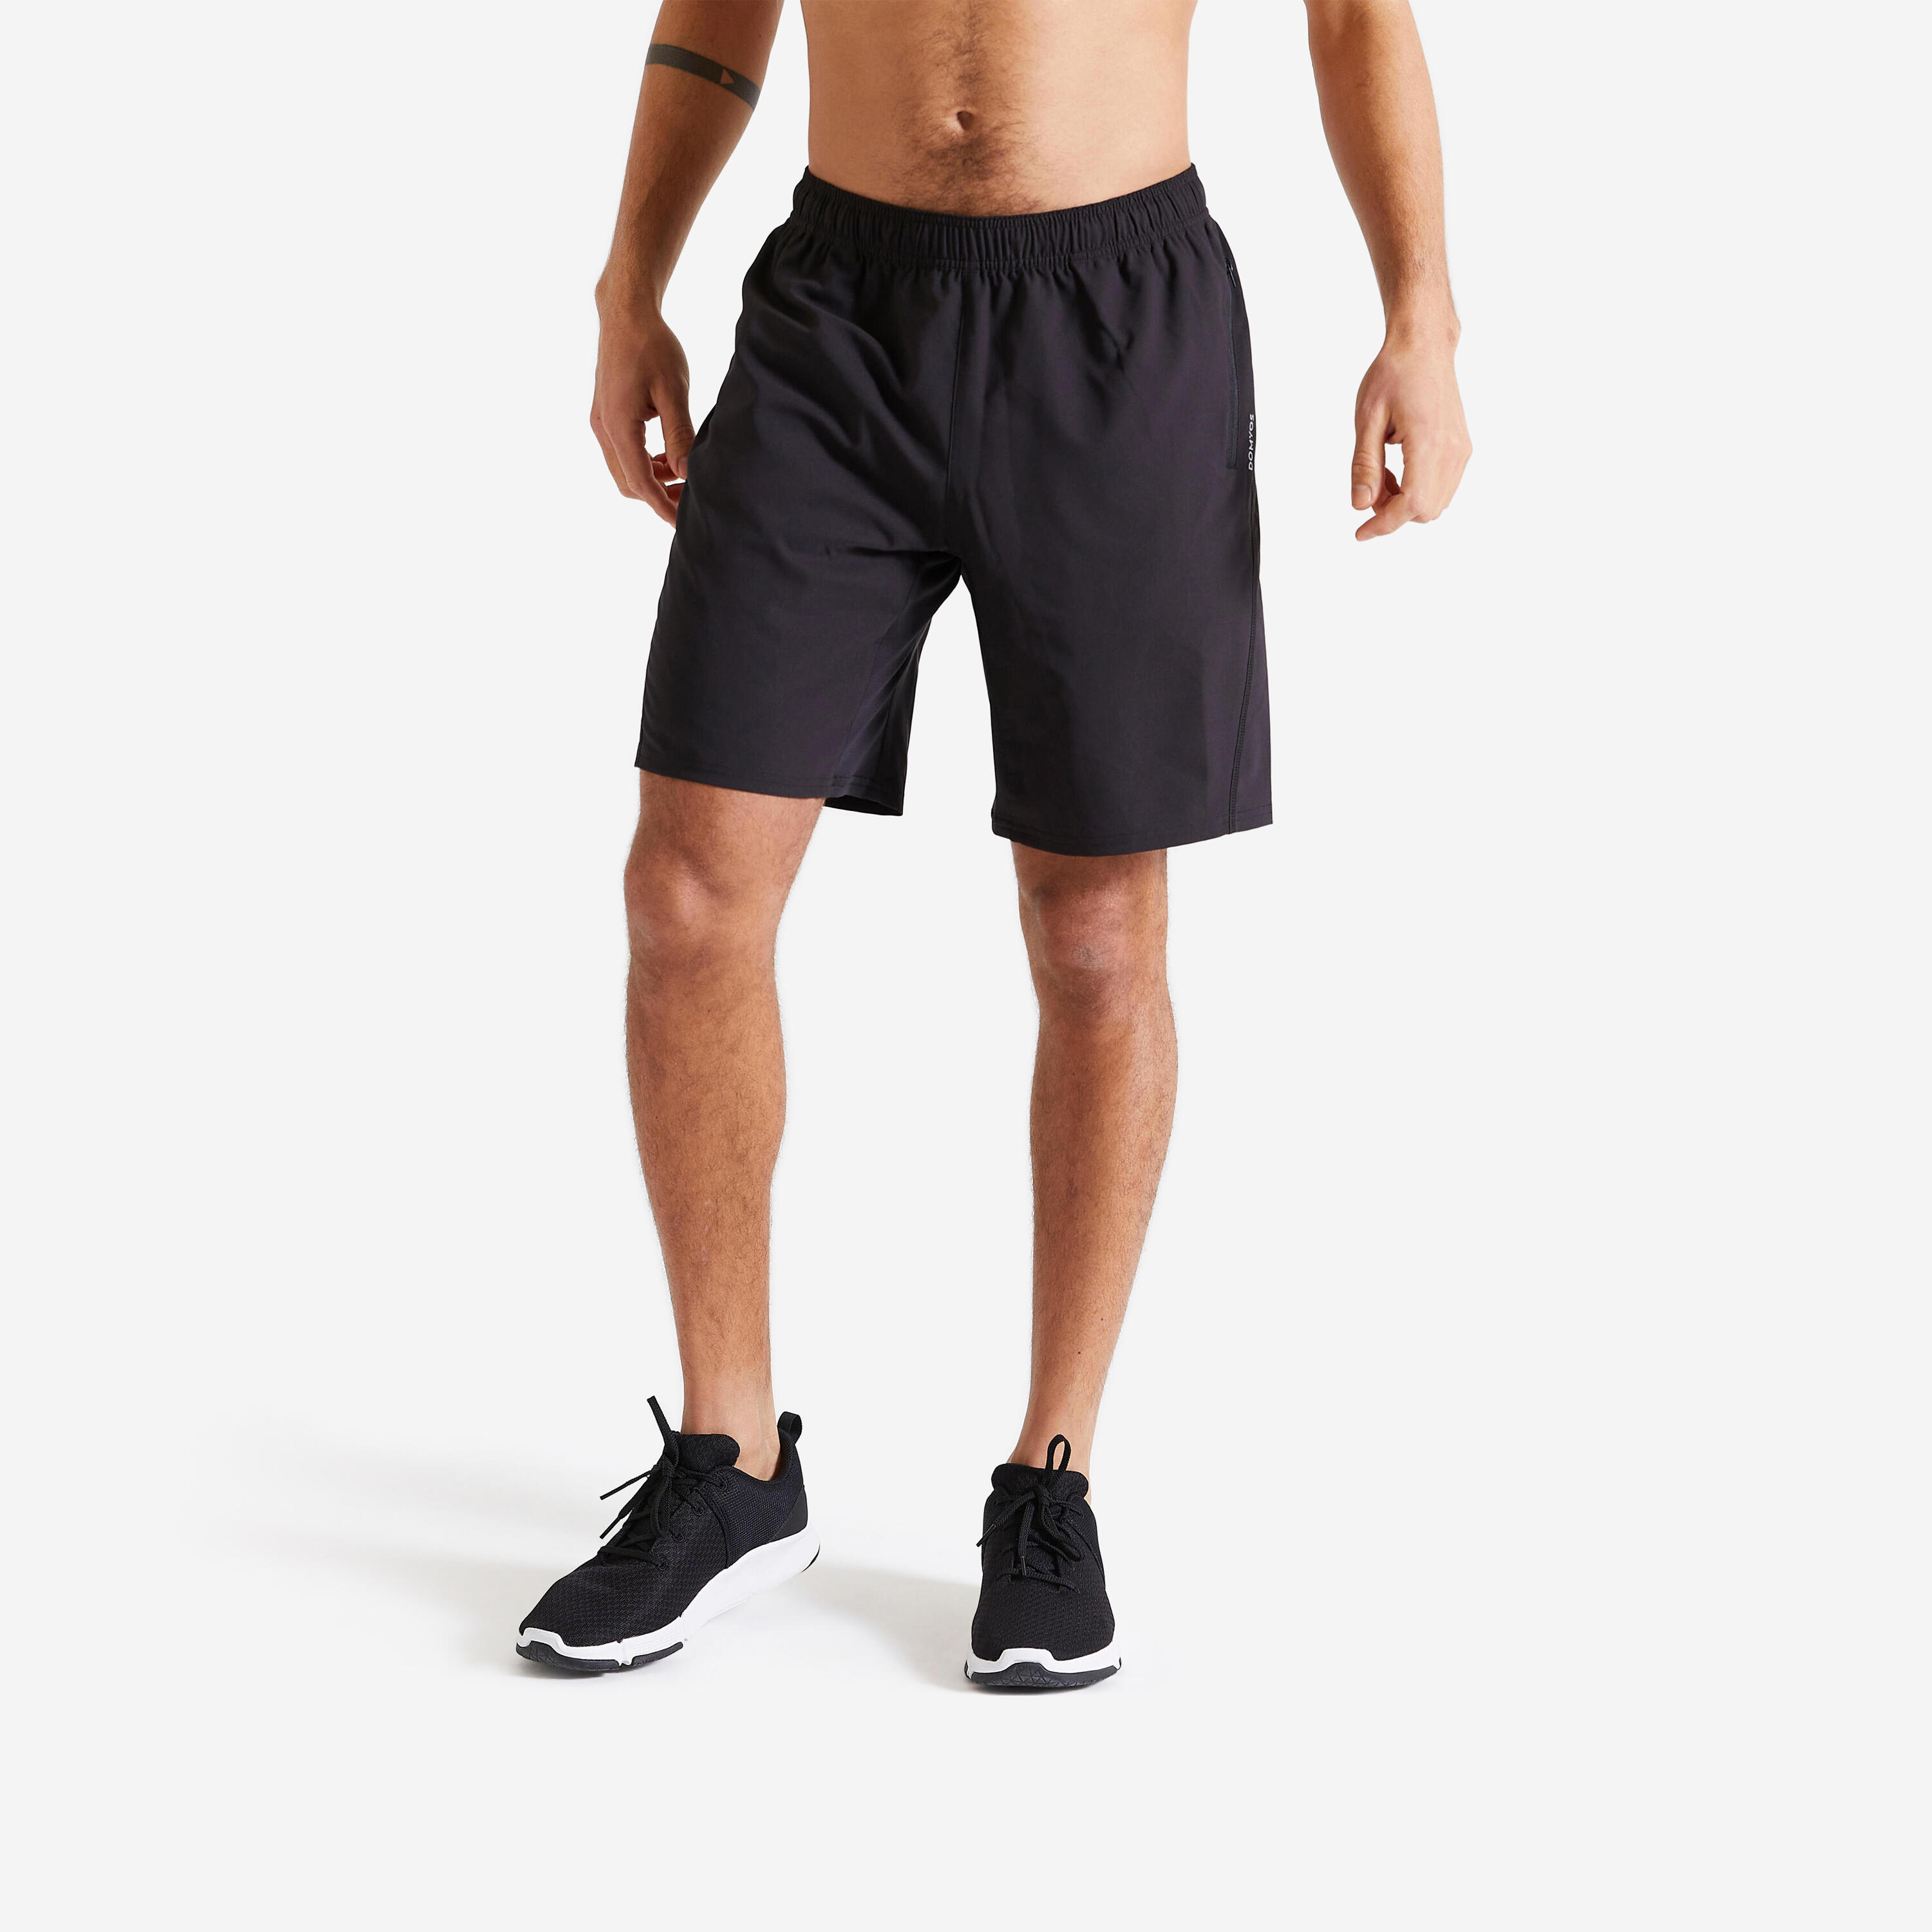 Men's Shorts –120 - smoked black, [EN] Test BC9 - Domyos - Decathlon